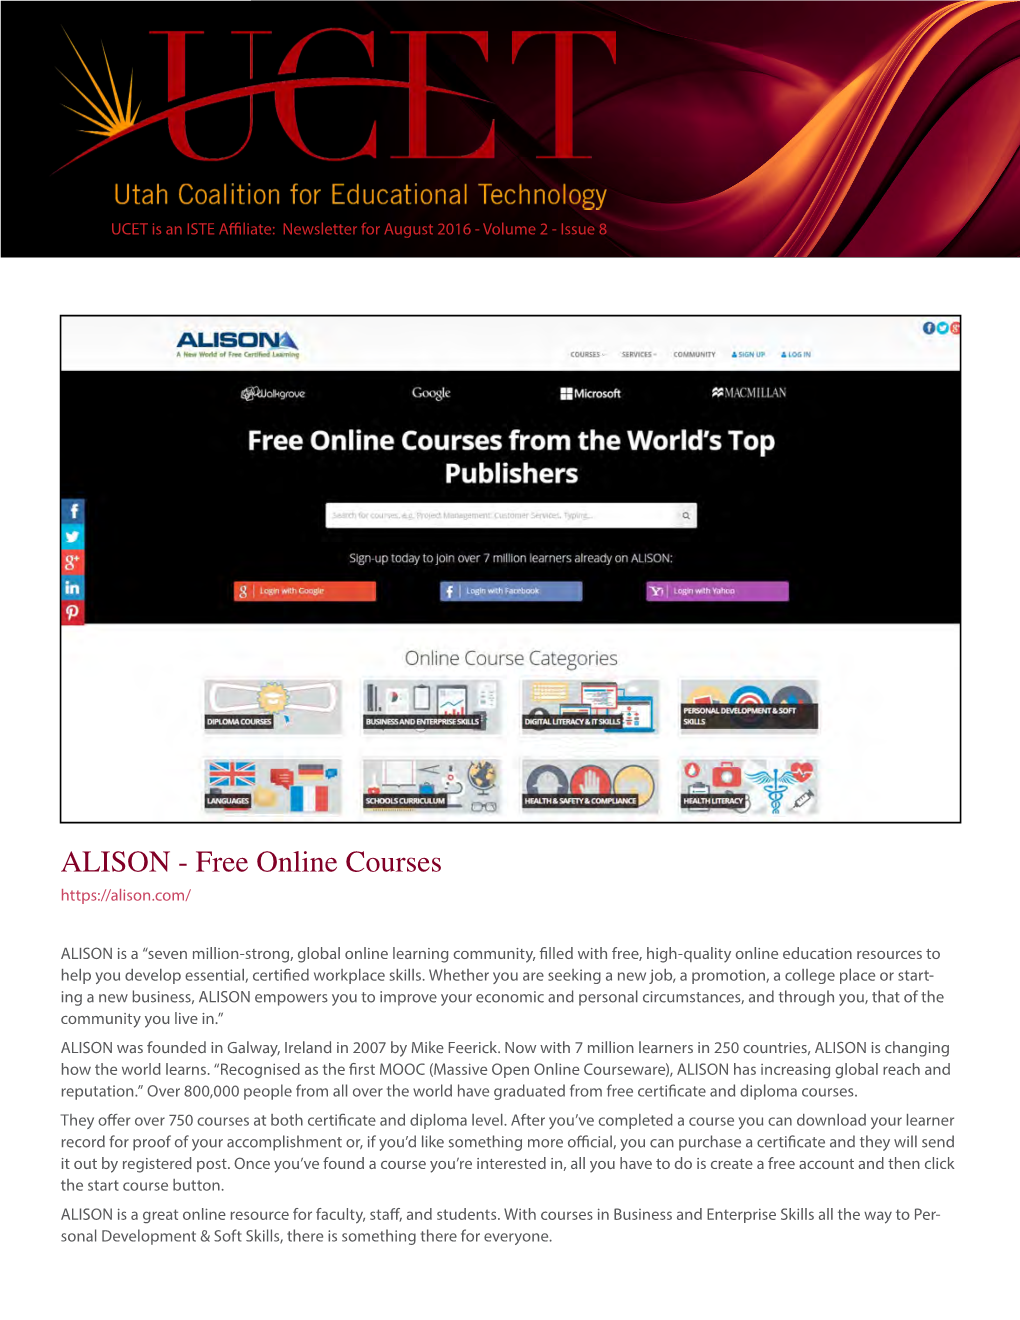 ALISON - Free Online Courses